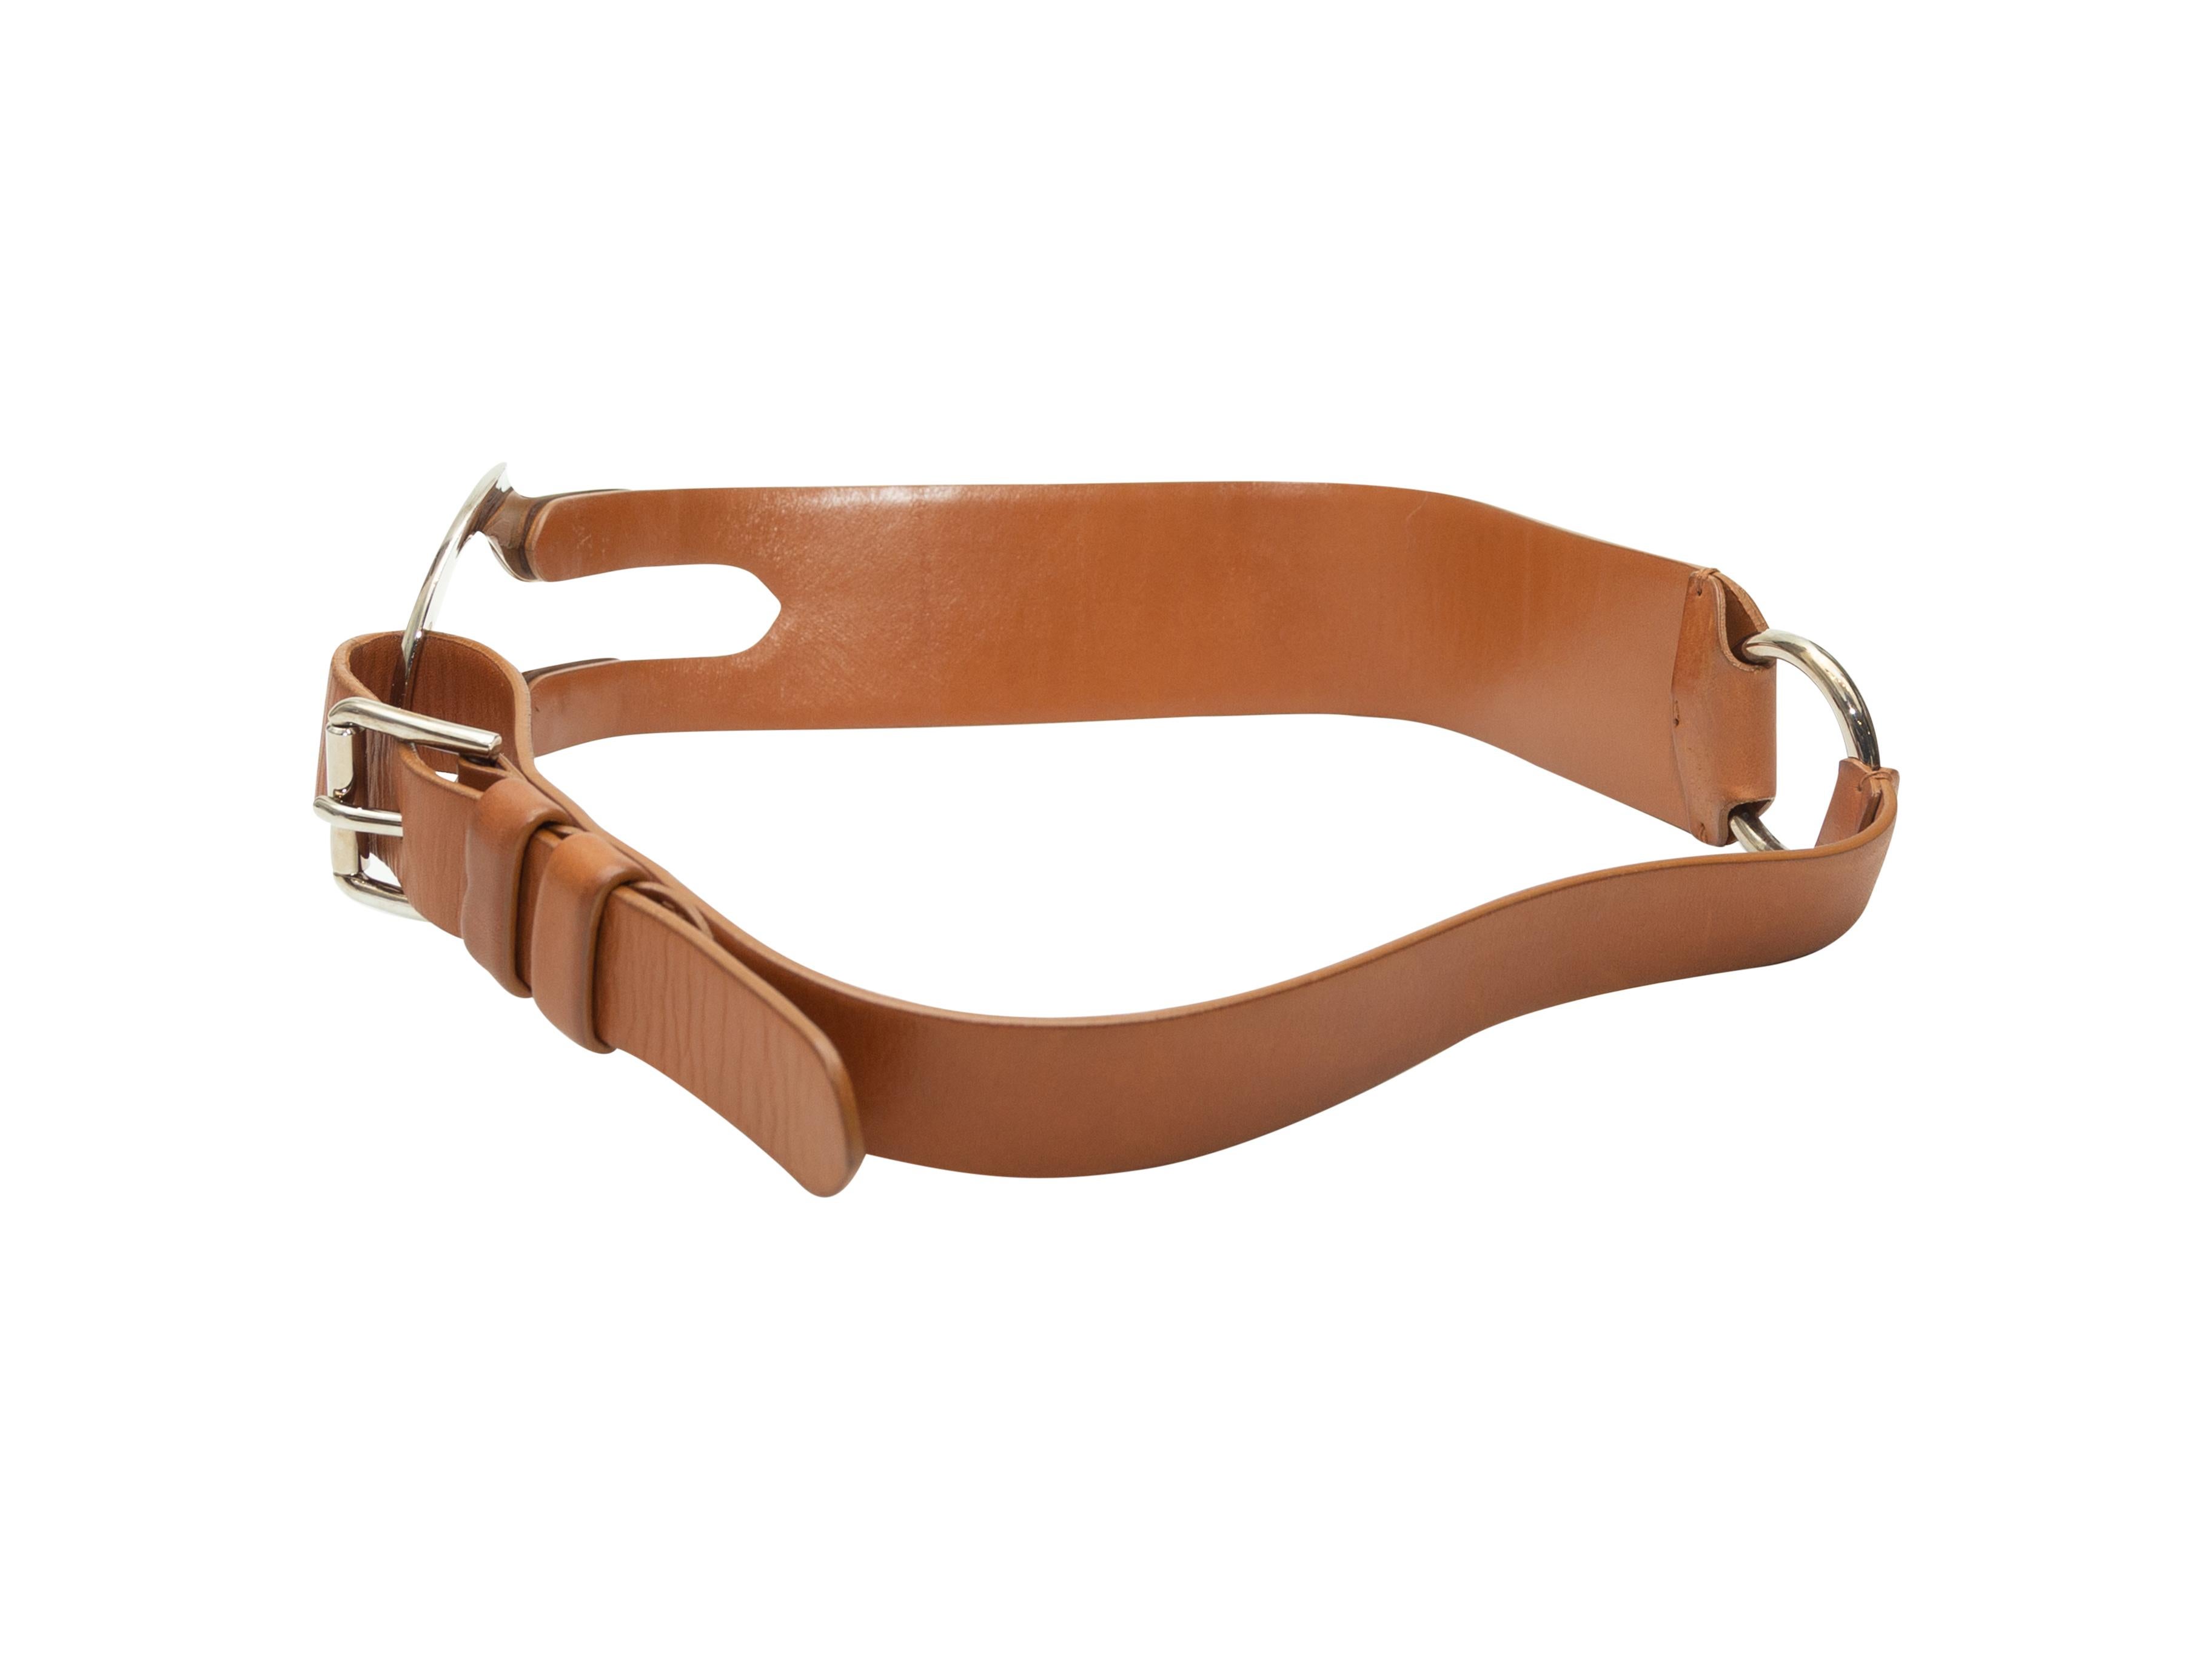 Ralph Lauren Tan Leather Belt 1